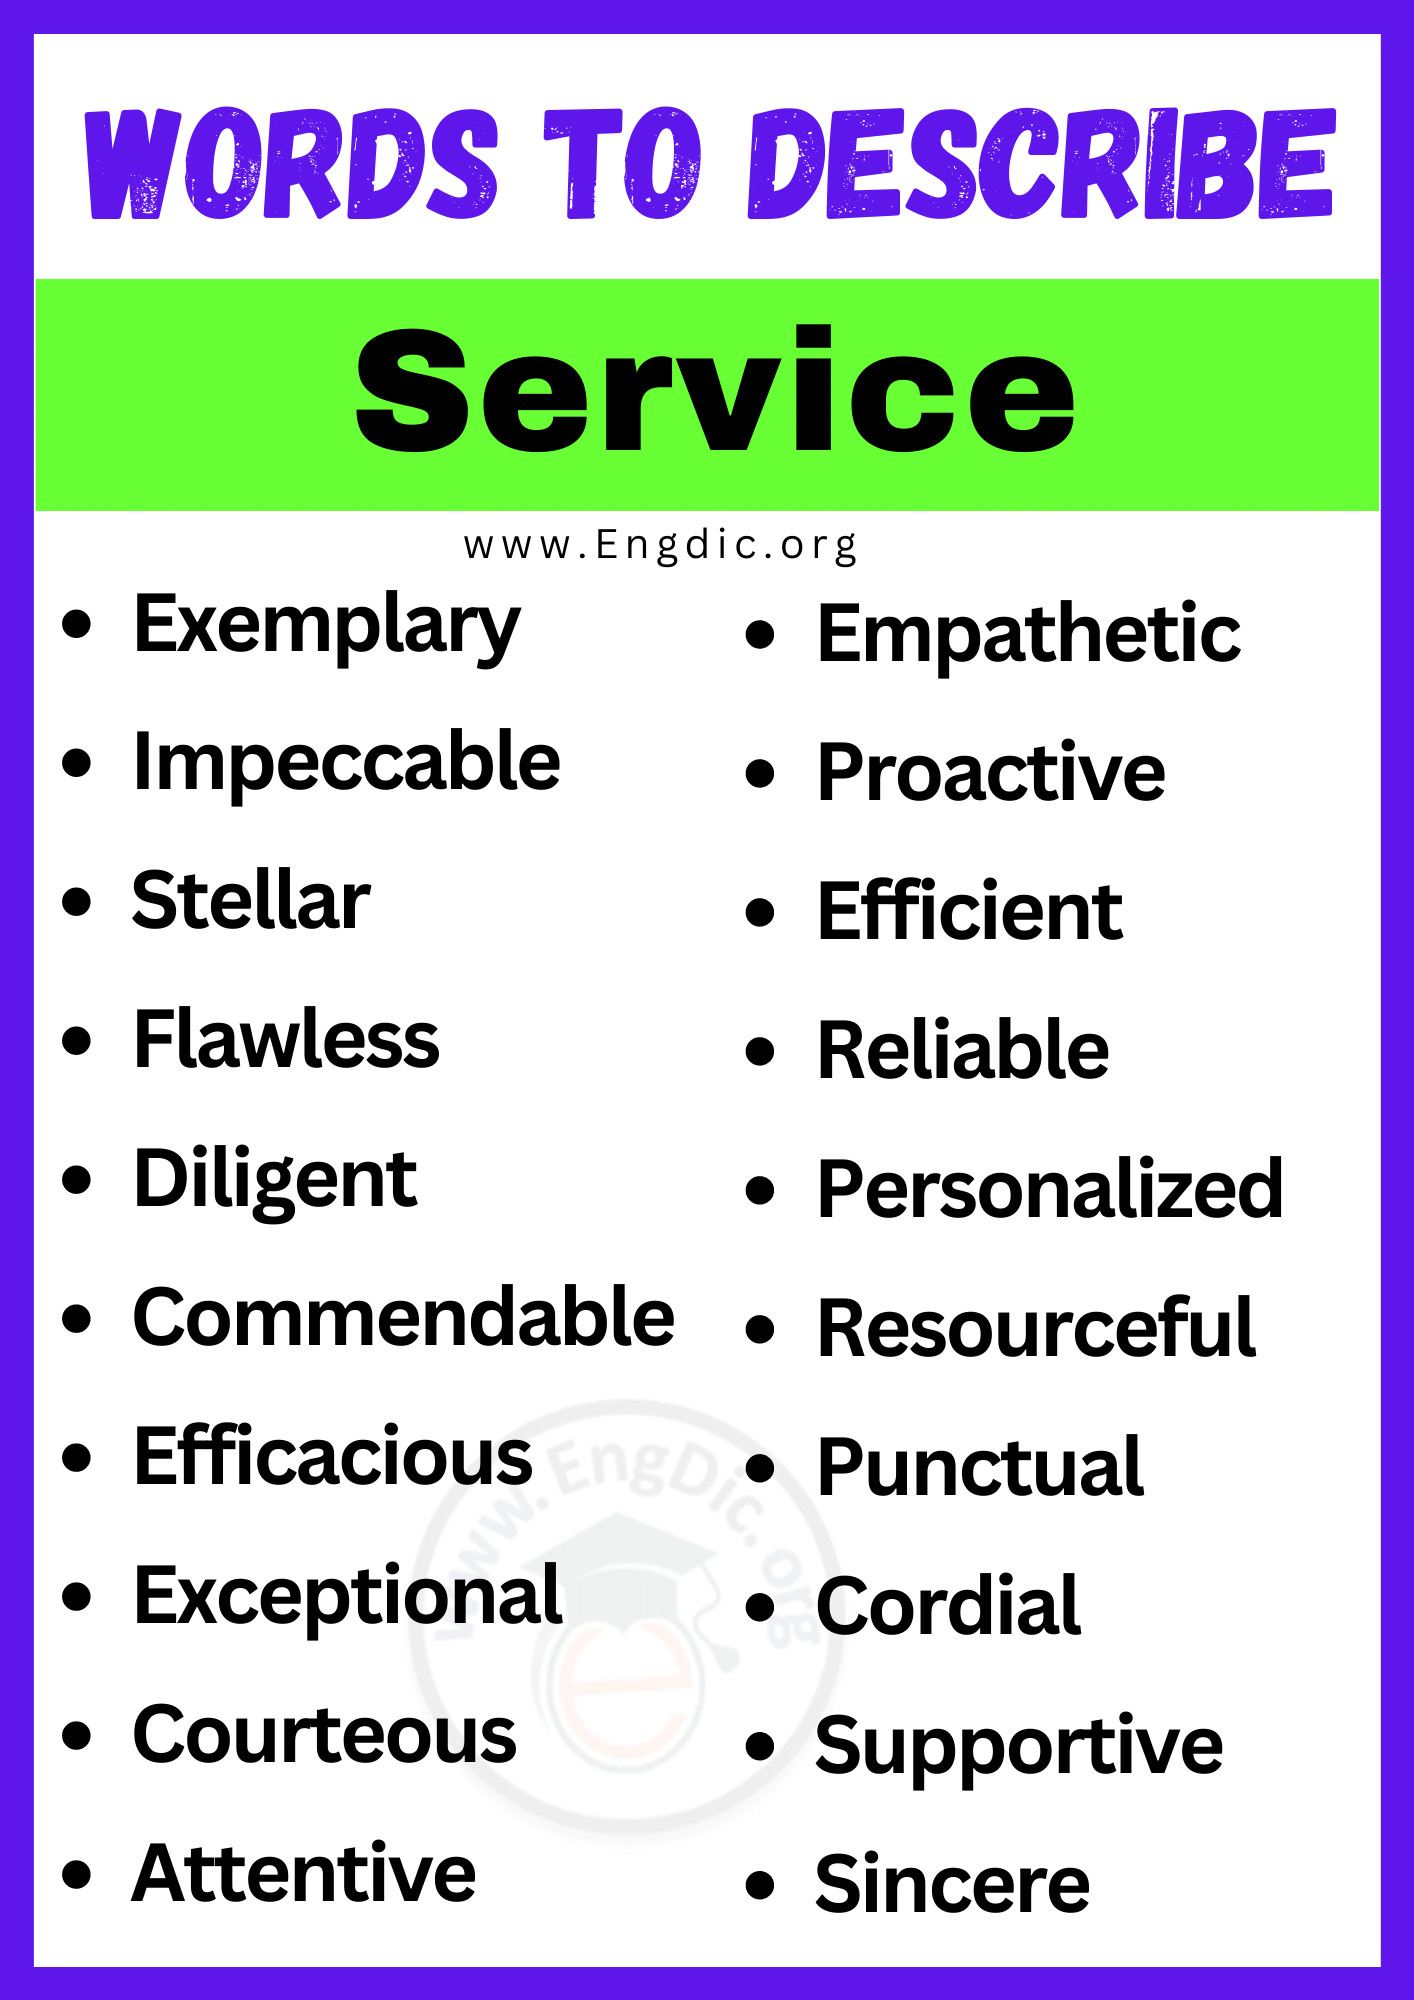 Words to Describe Service